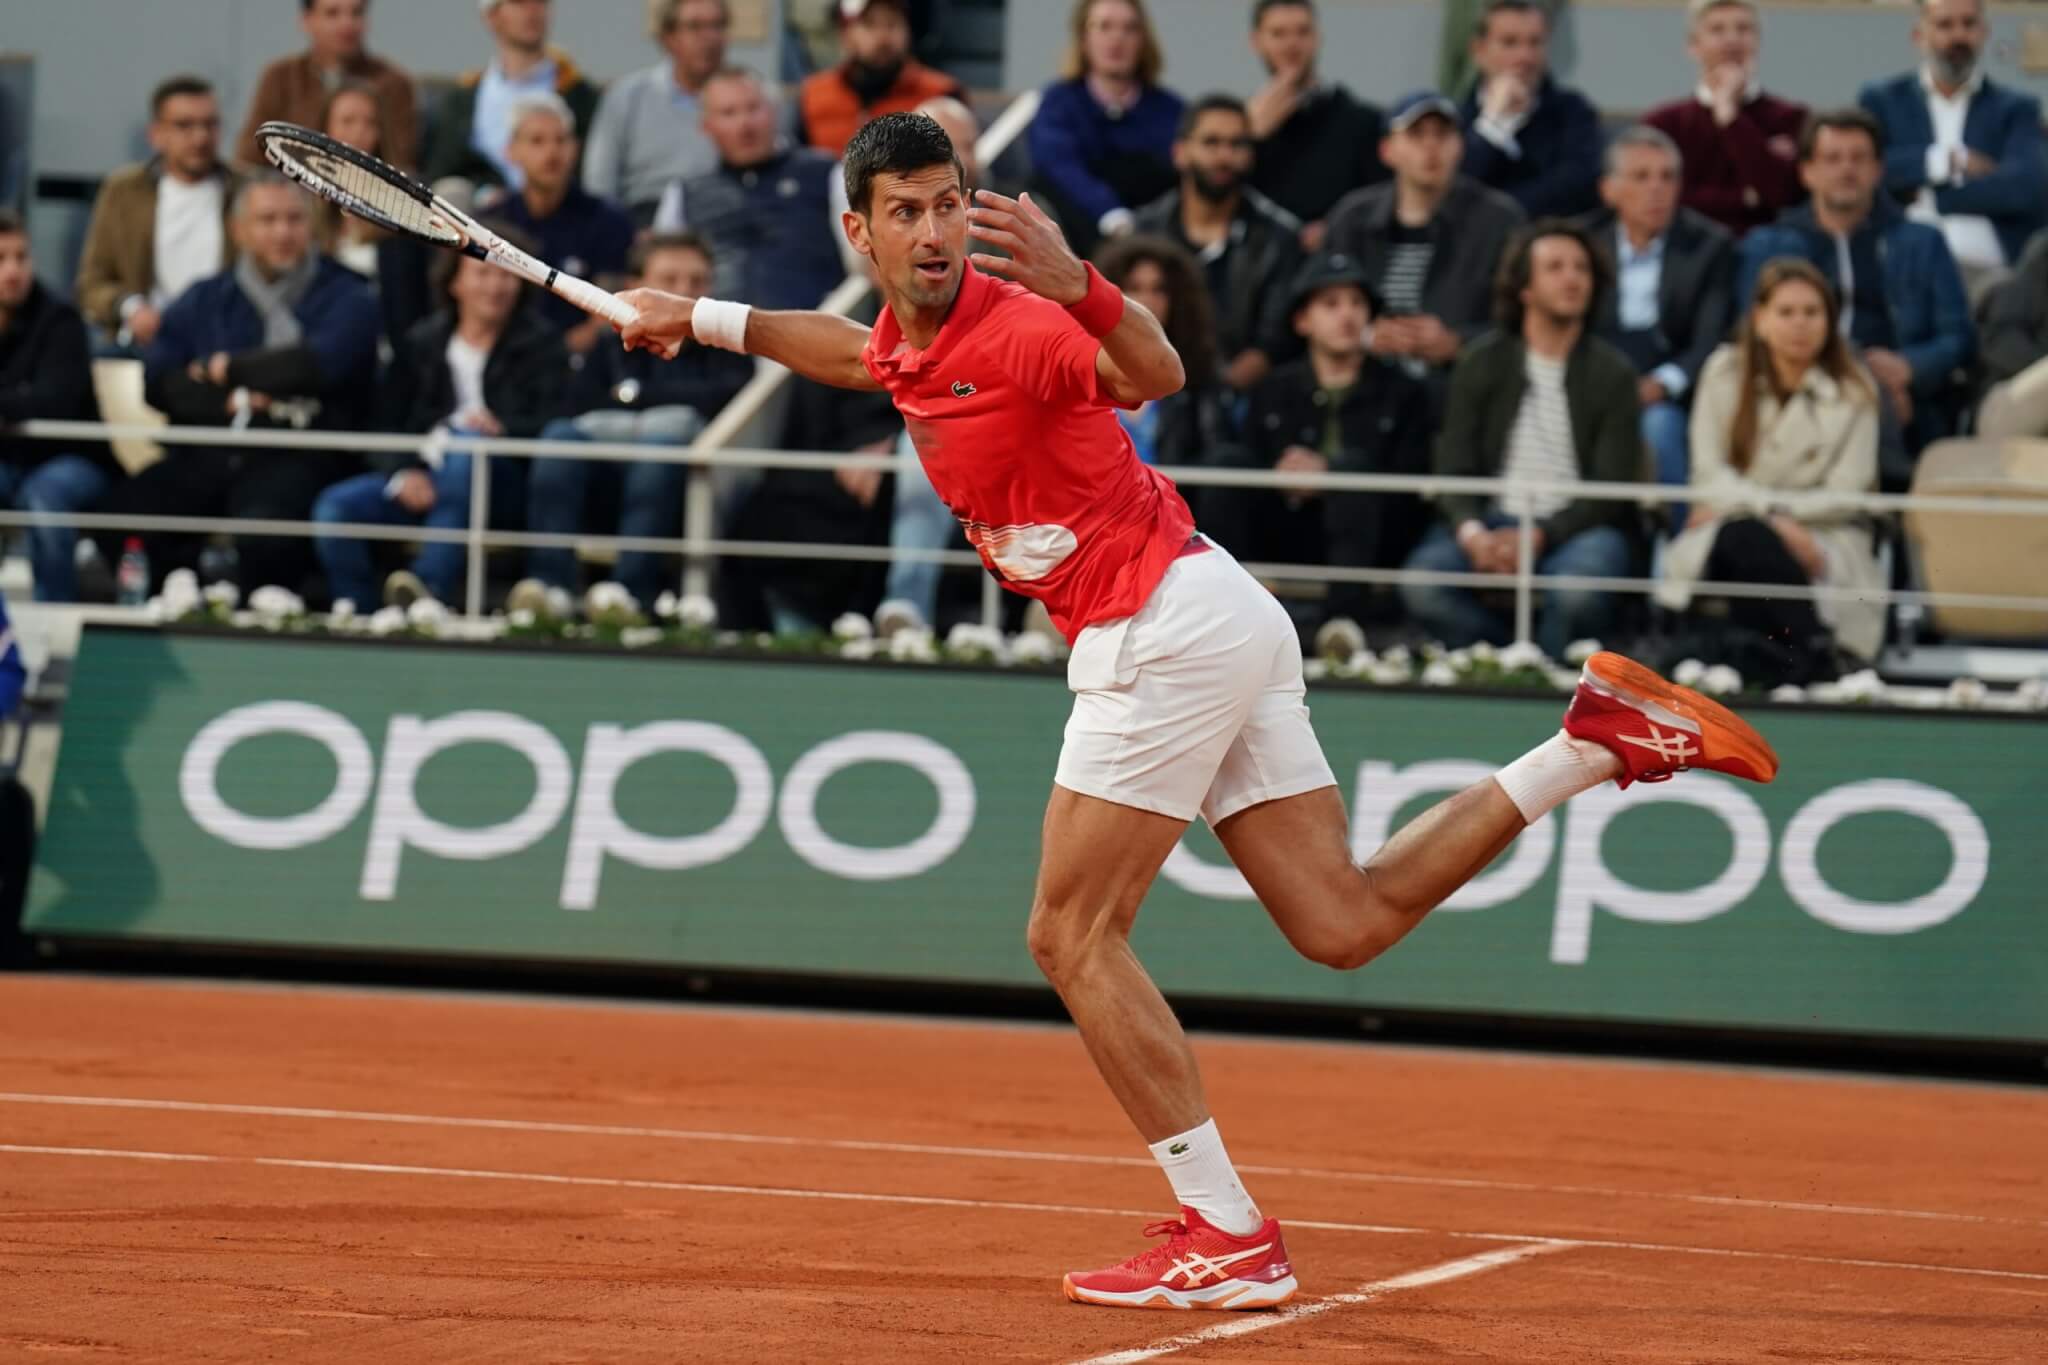 PARIS, FRANCE - MAY 31, 2022: Grand Slam champion Novak Djokovic of Serbia in action during his quater-final match against Rafael Nadal of Spain at 2022 Roland Garros in Paris, France